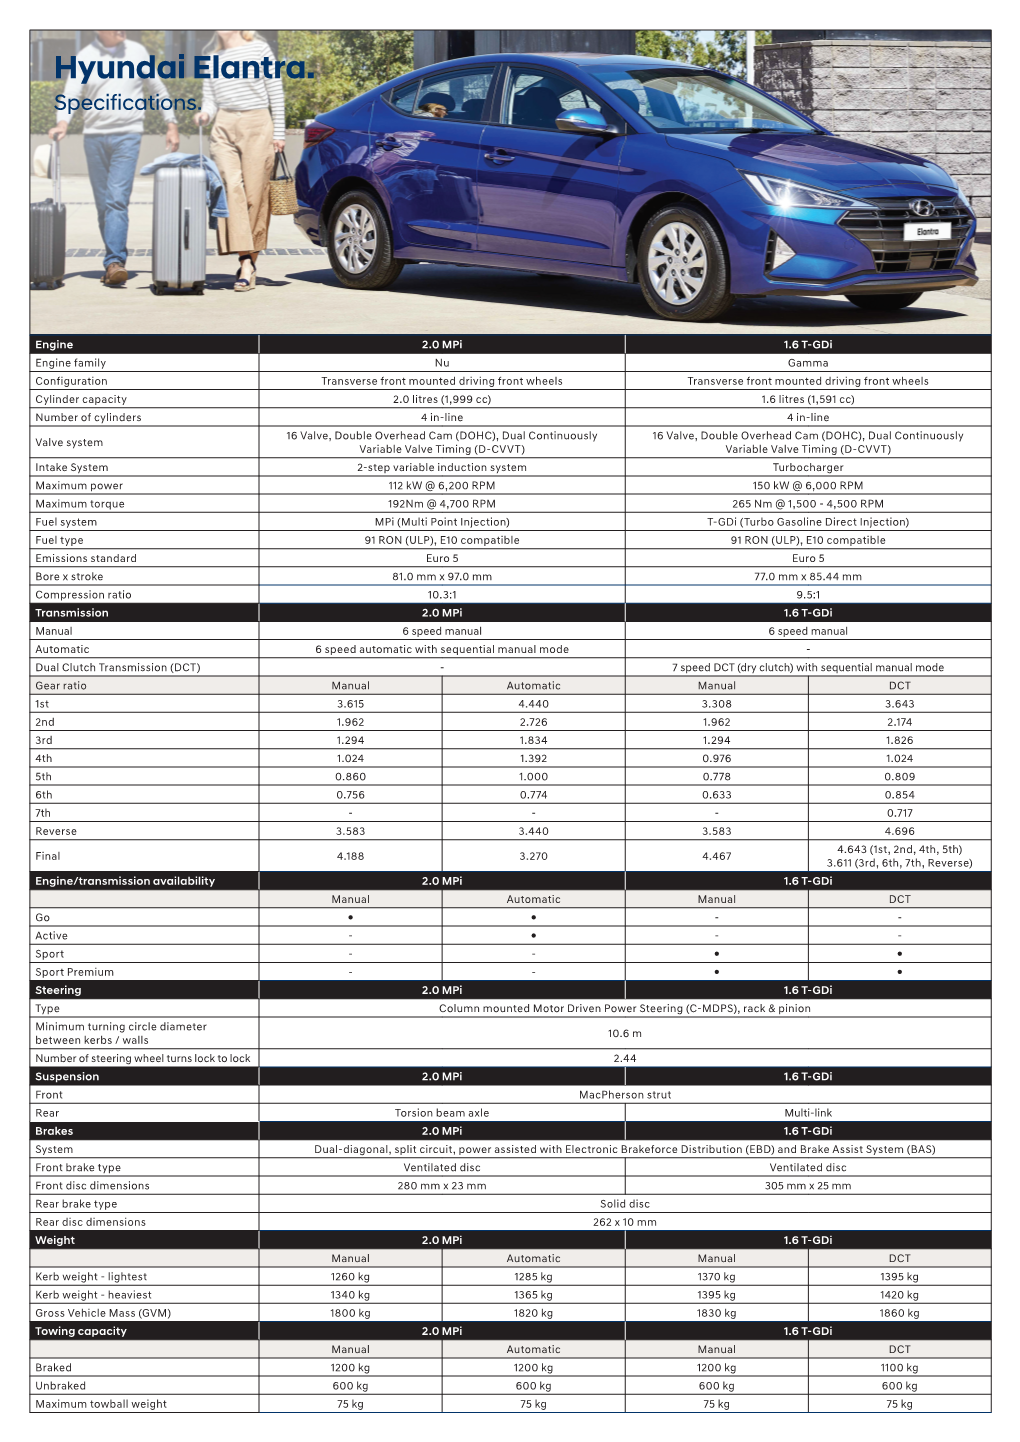 Hyundai Elantra. Specifications